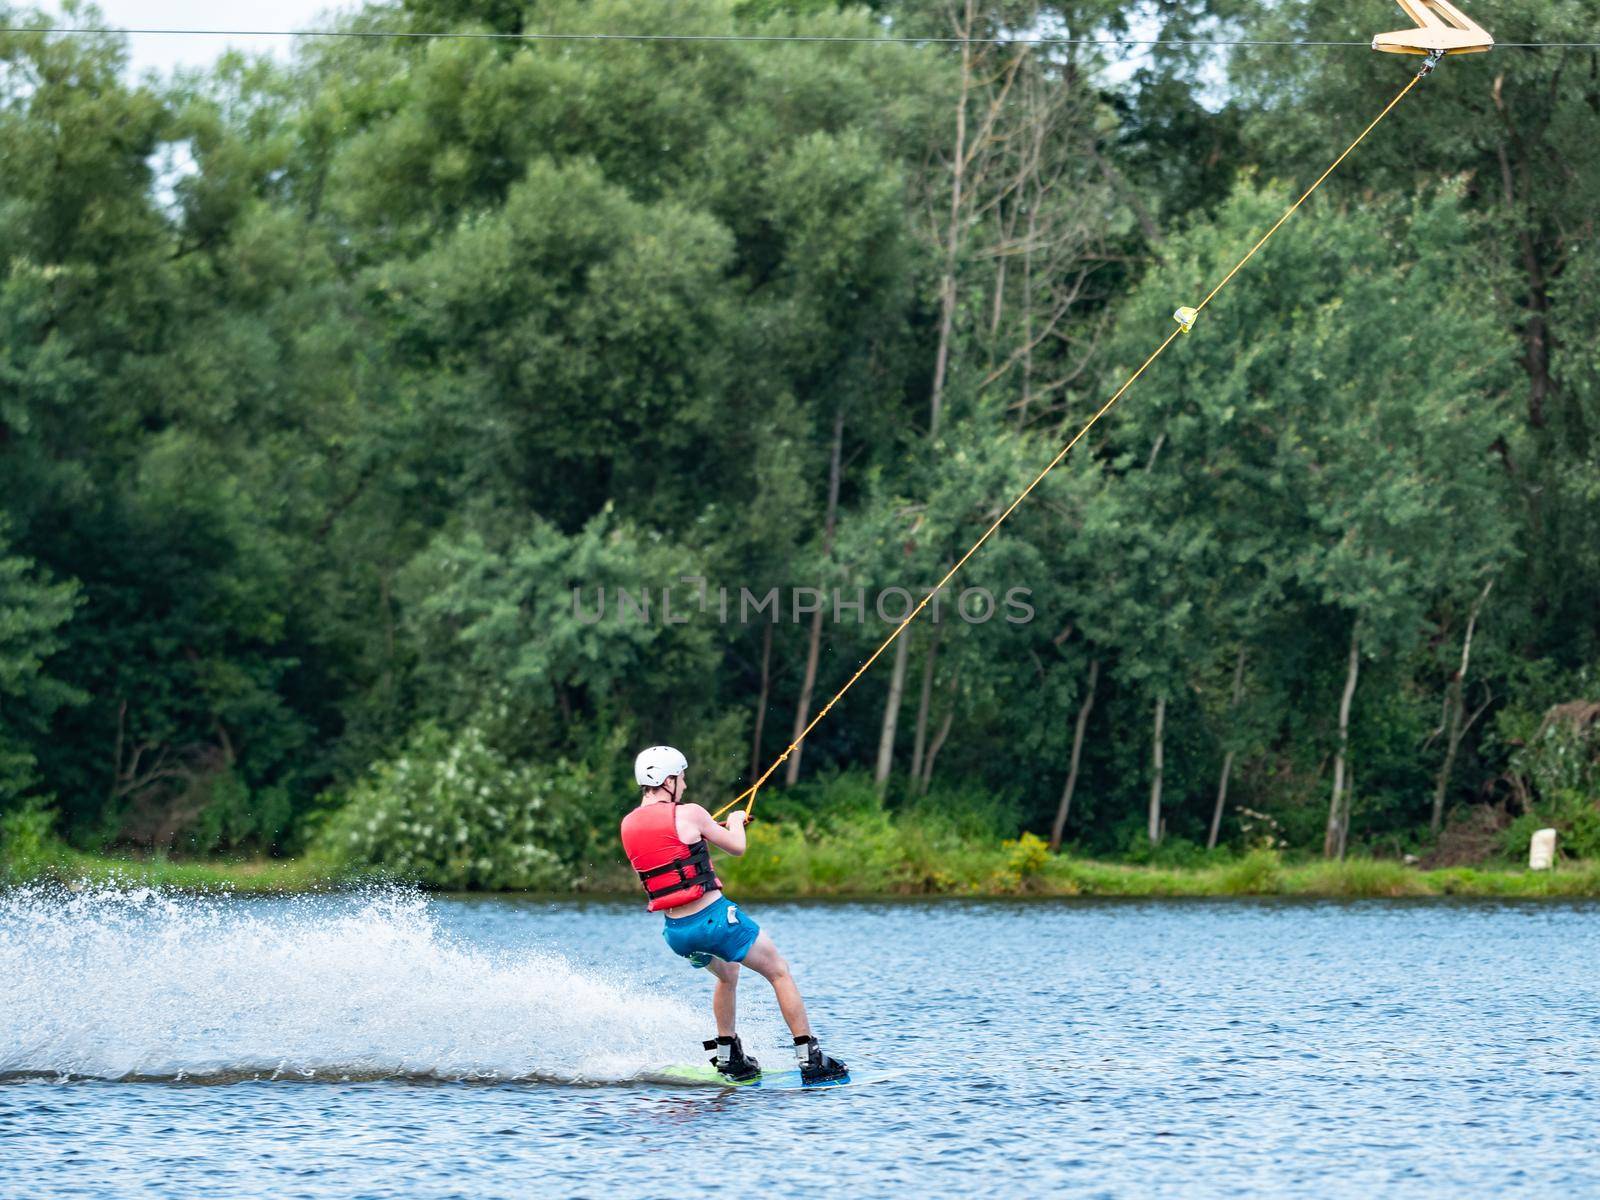 Straz, Czechia. 29th of July, 2021. Man wake boarding on lake in high speed.